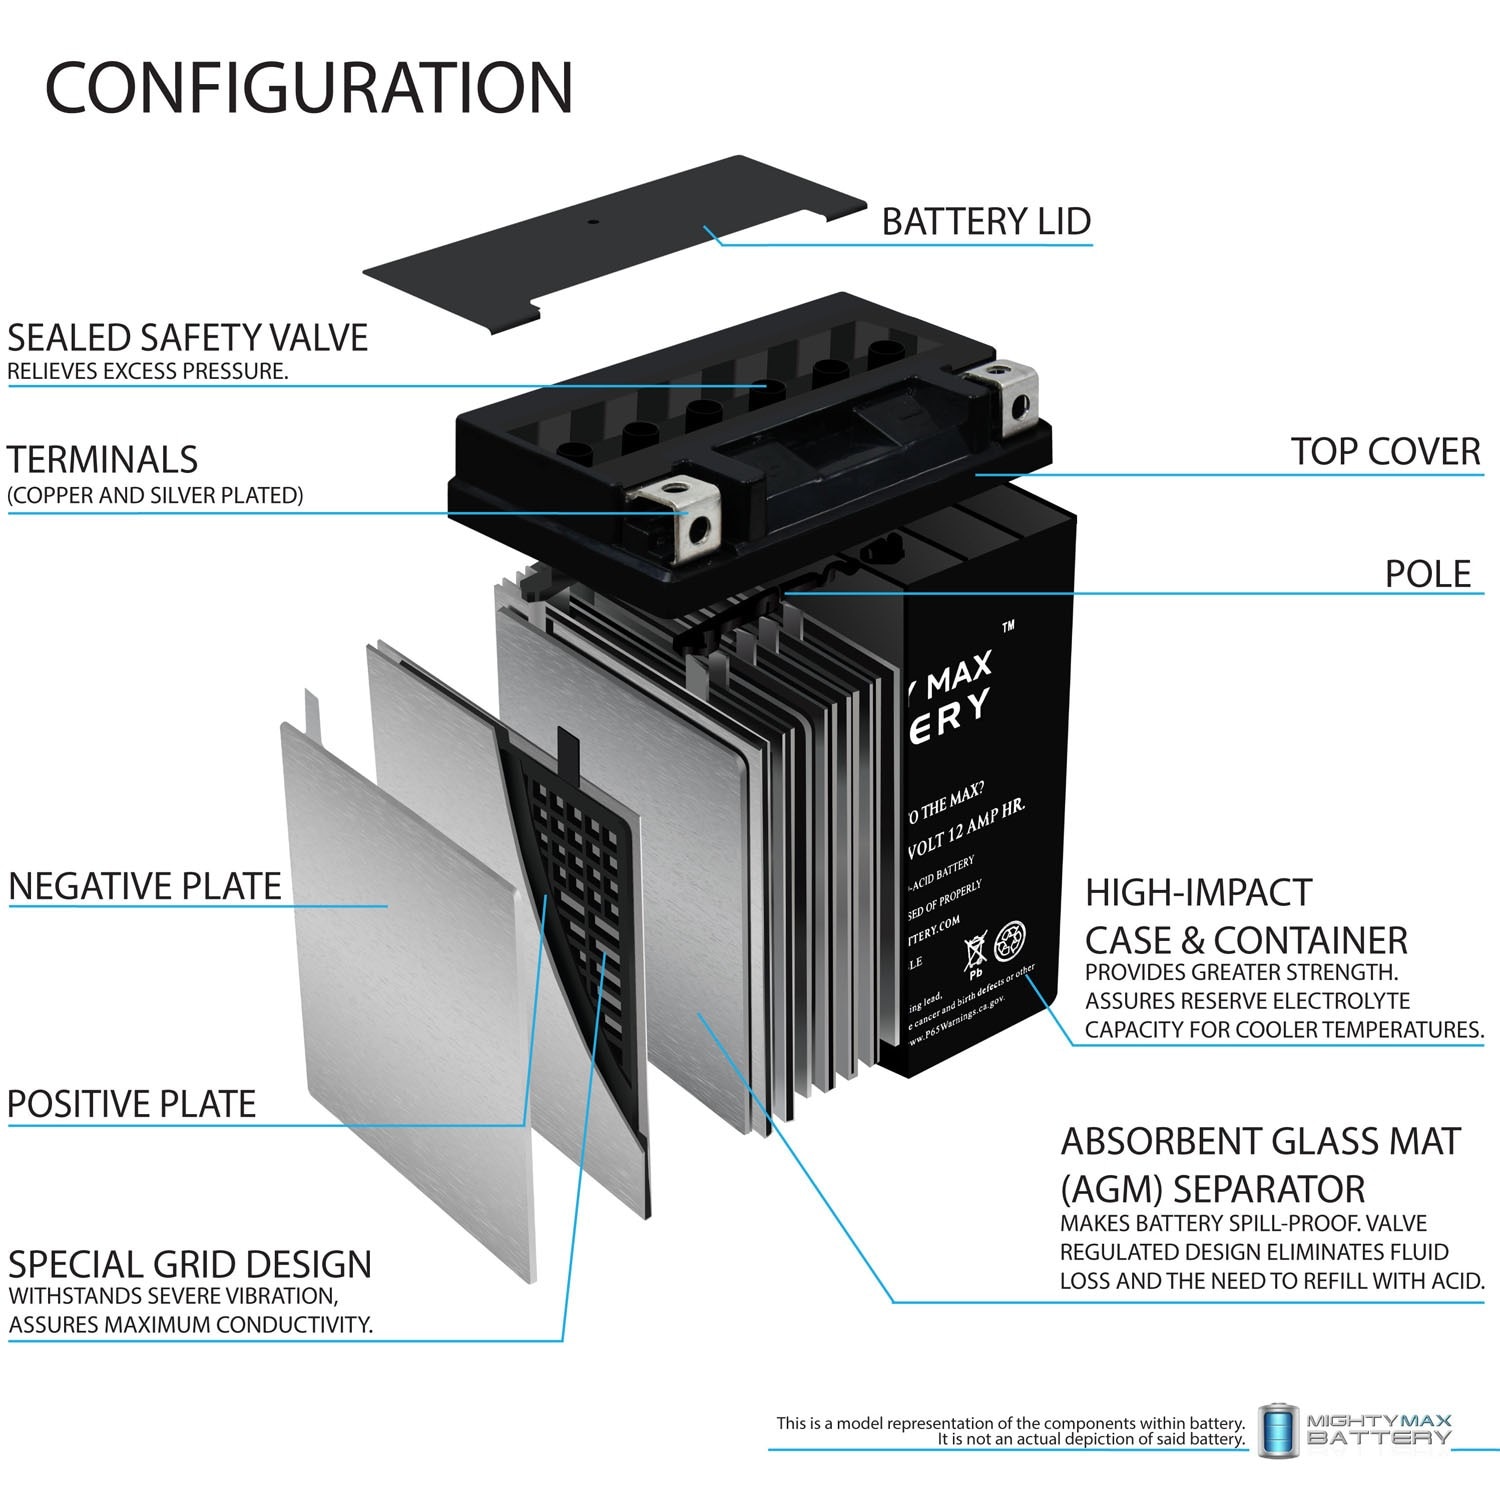 Battery kit for APC Smart UPS 620 and APC Back UPS 650 replaces APC RBC4